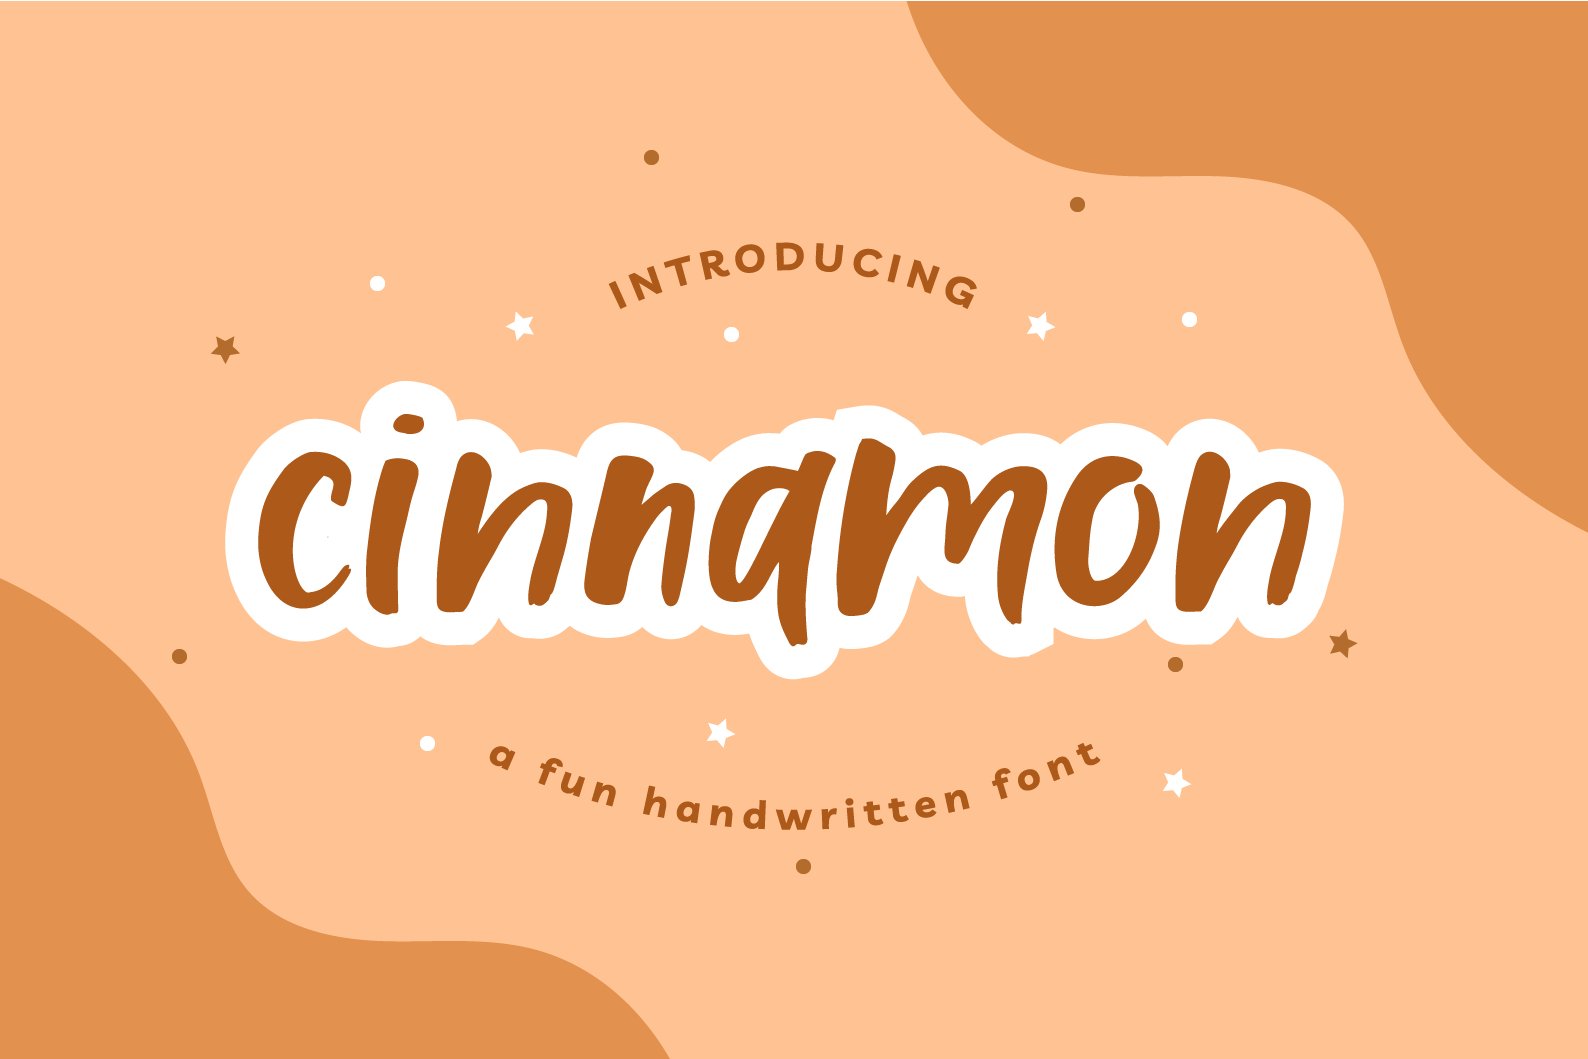 Cinnamon - Fun Handwritten Font cover image.